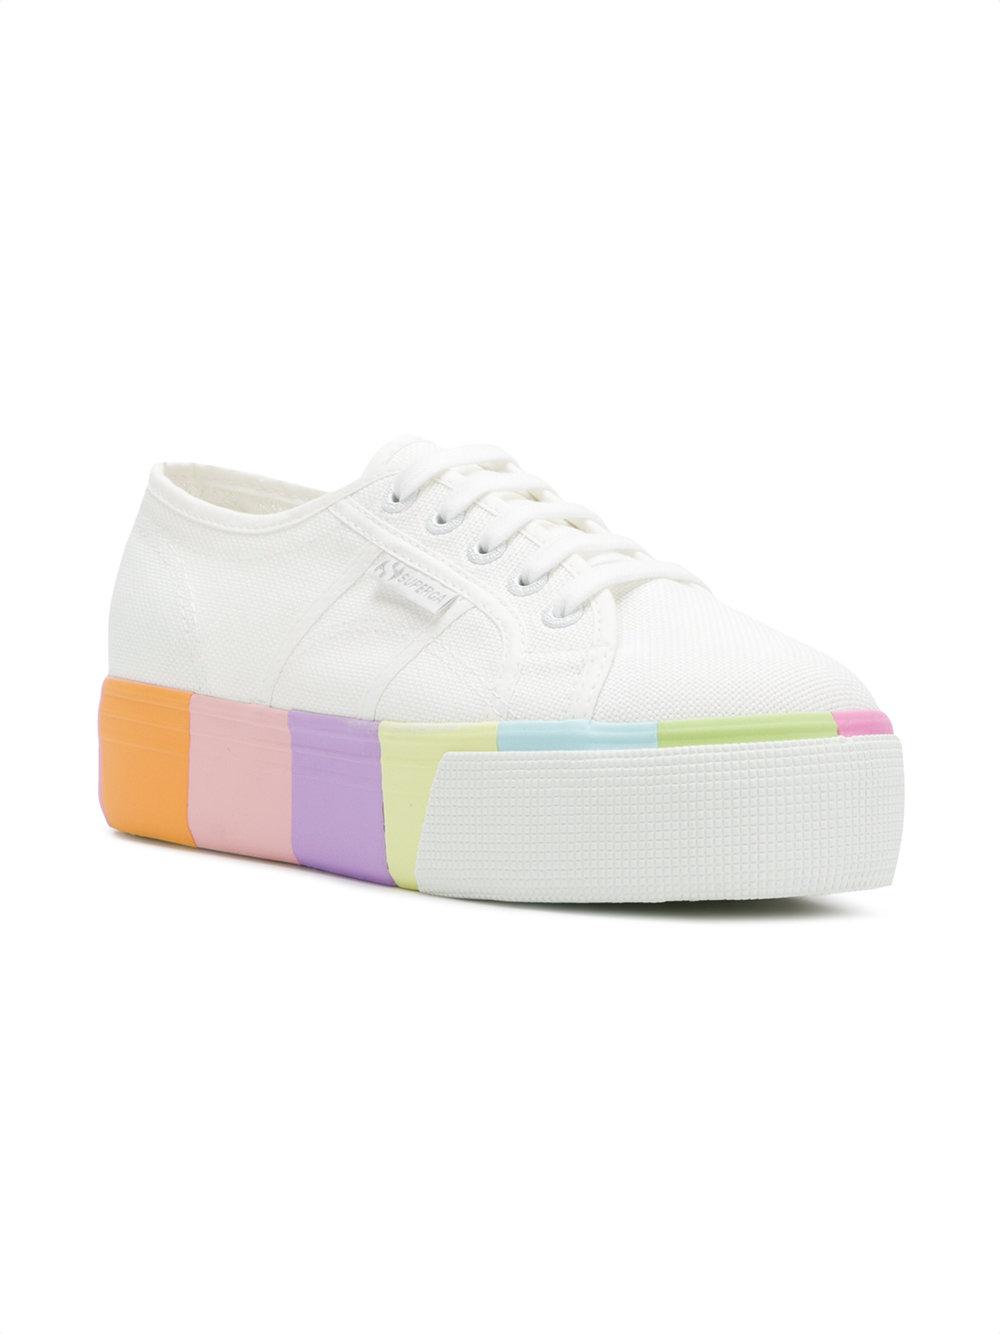 Superga Cotton Rainbow Platform Sole Sneakers in White | Lyst